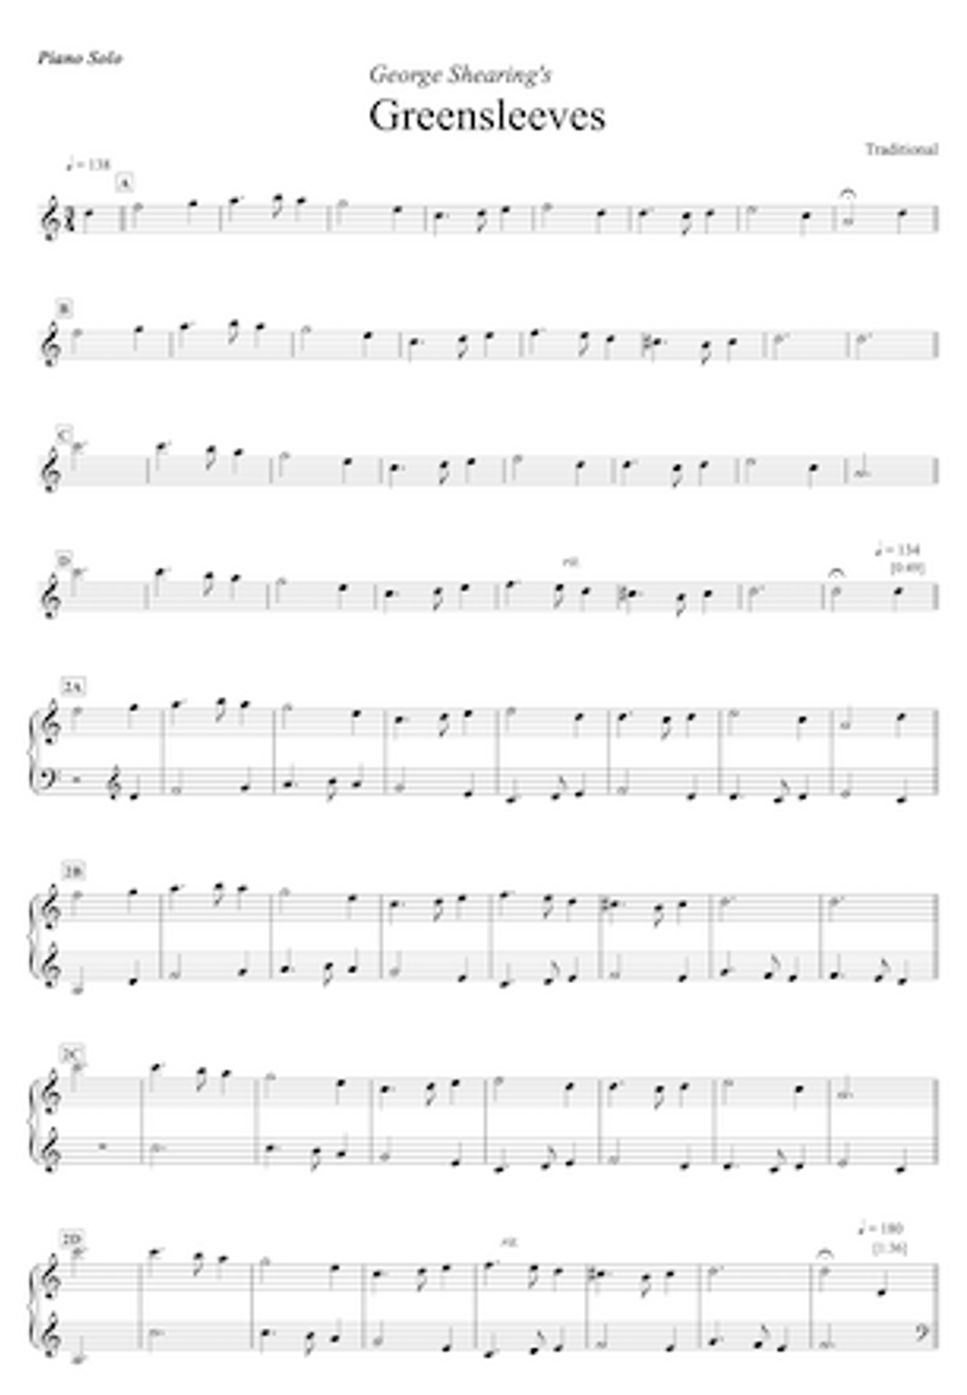 Greensleeves - George Shearing (グリーンスリーヴス/ジャズ・ピアノ・ソロ完全コピー譜) (ピアノ・ソロ) by MusicSheeter